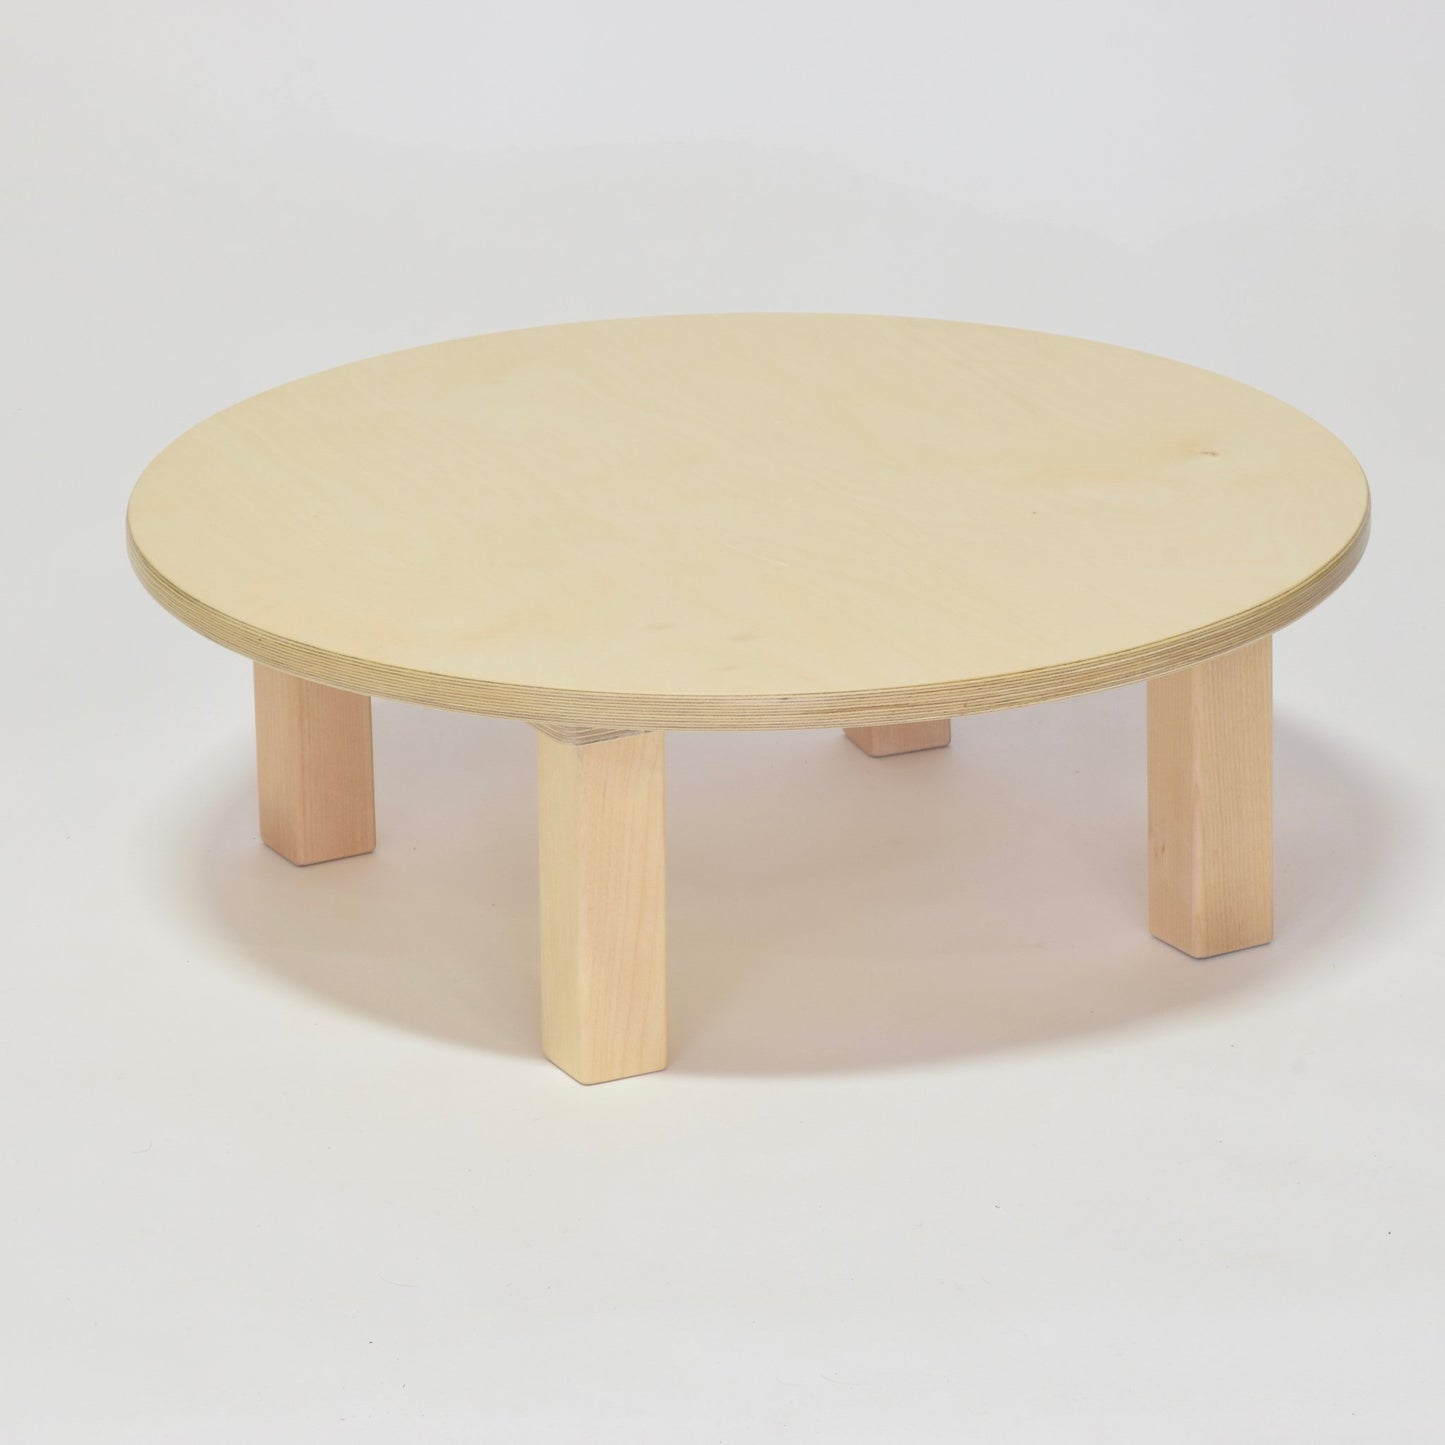 Round Table - RAD Children's Furniture - pikler triangle - montessori toddler furniture - climbing triangle - nursery room